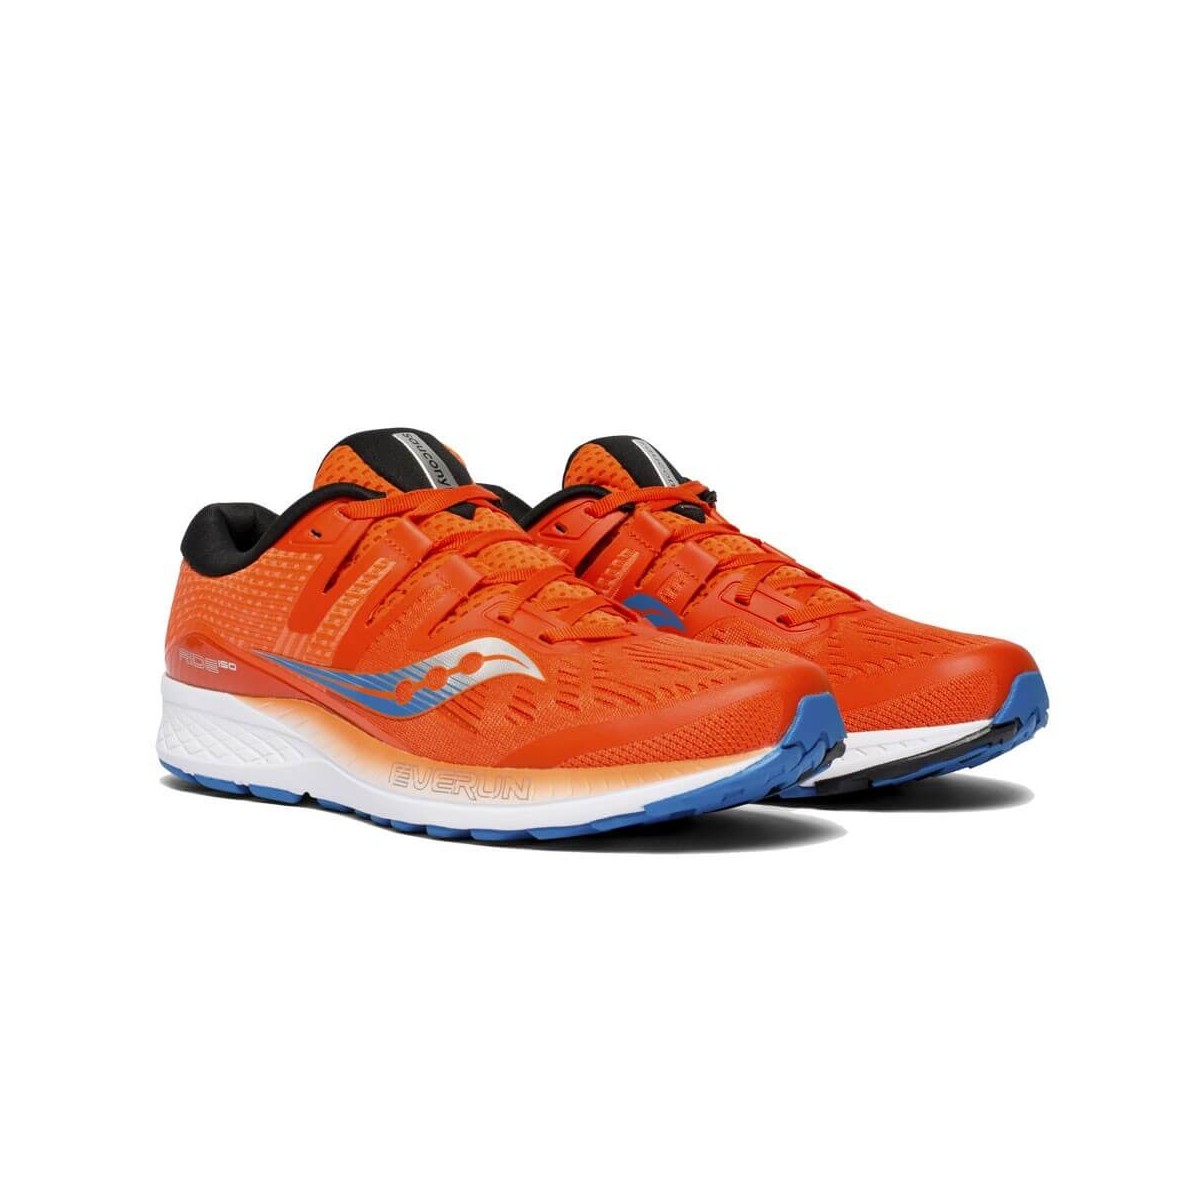 Orange Saucony Ride ISO Mens Running Shoes 